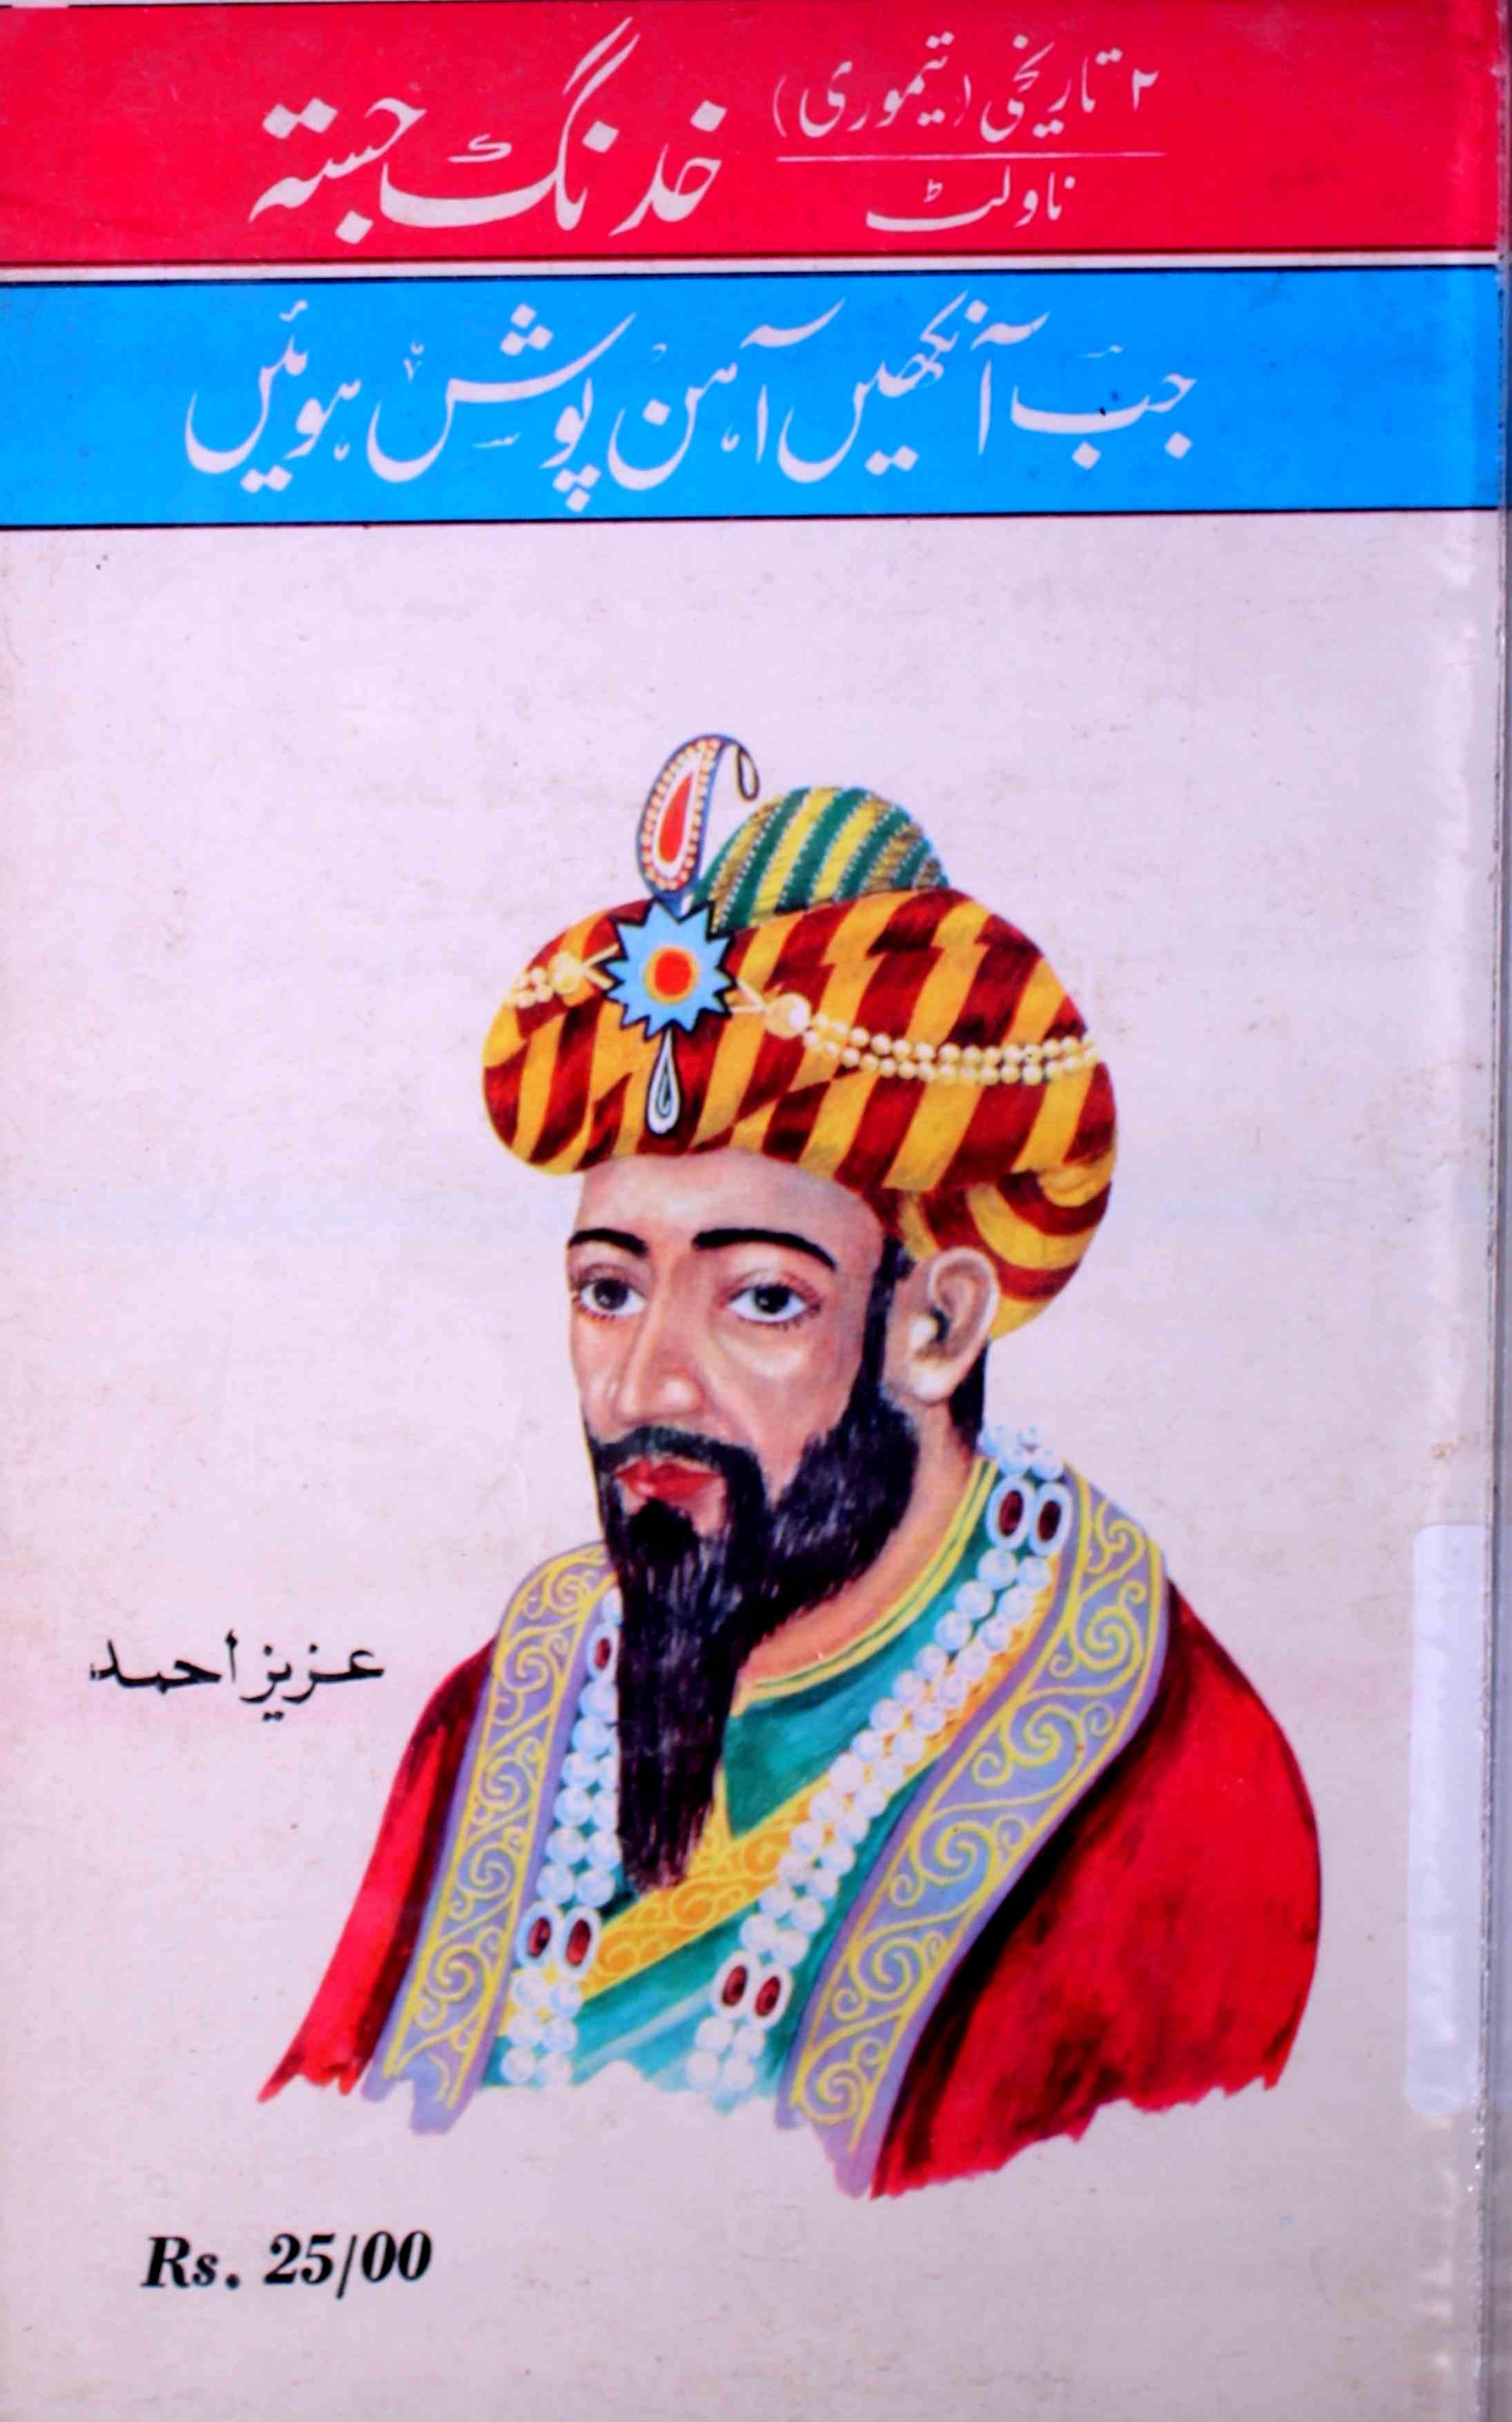 Khadang-e-Jasta Aur Jab Aankhen Aahan Posh Huin